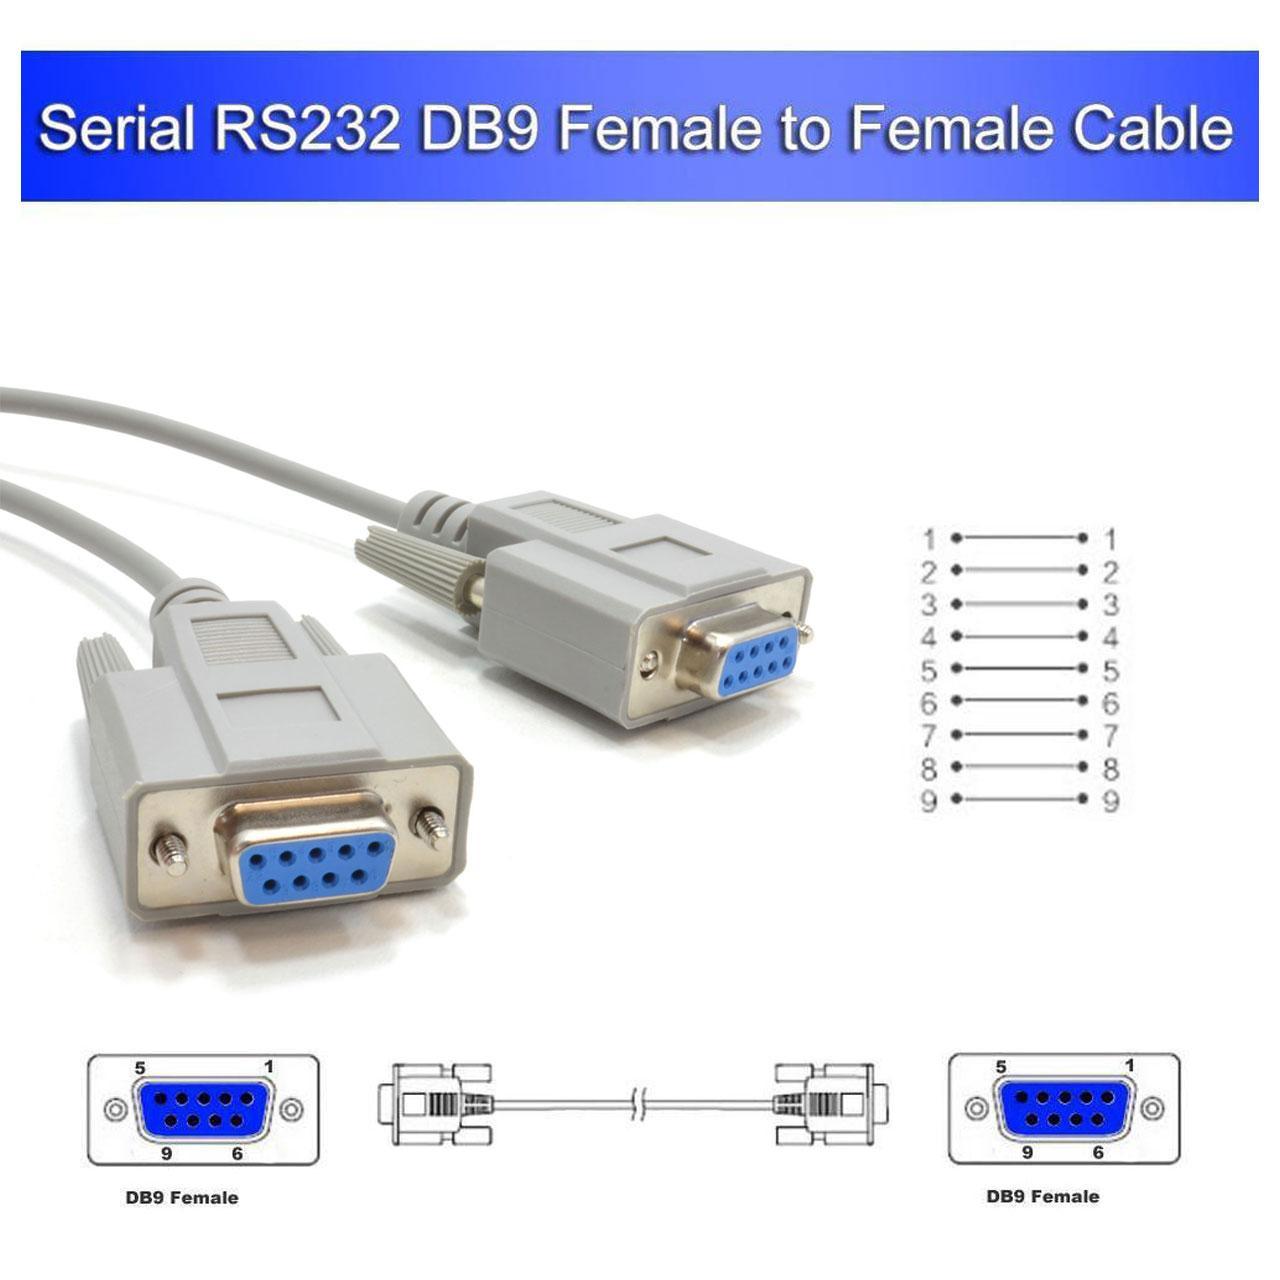 Cable Serial DB9 Female to Female کابل 9 به 9 دو سر ماده سریال با اتصال 1 به 1